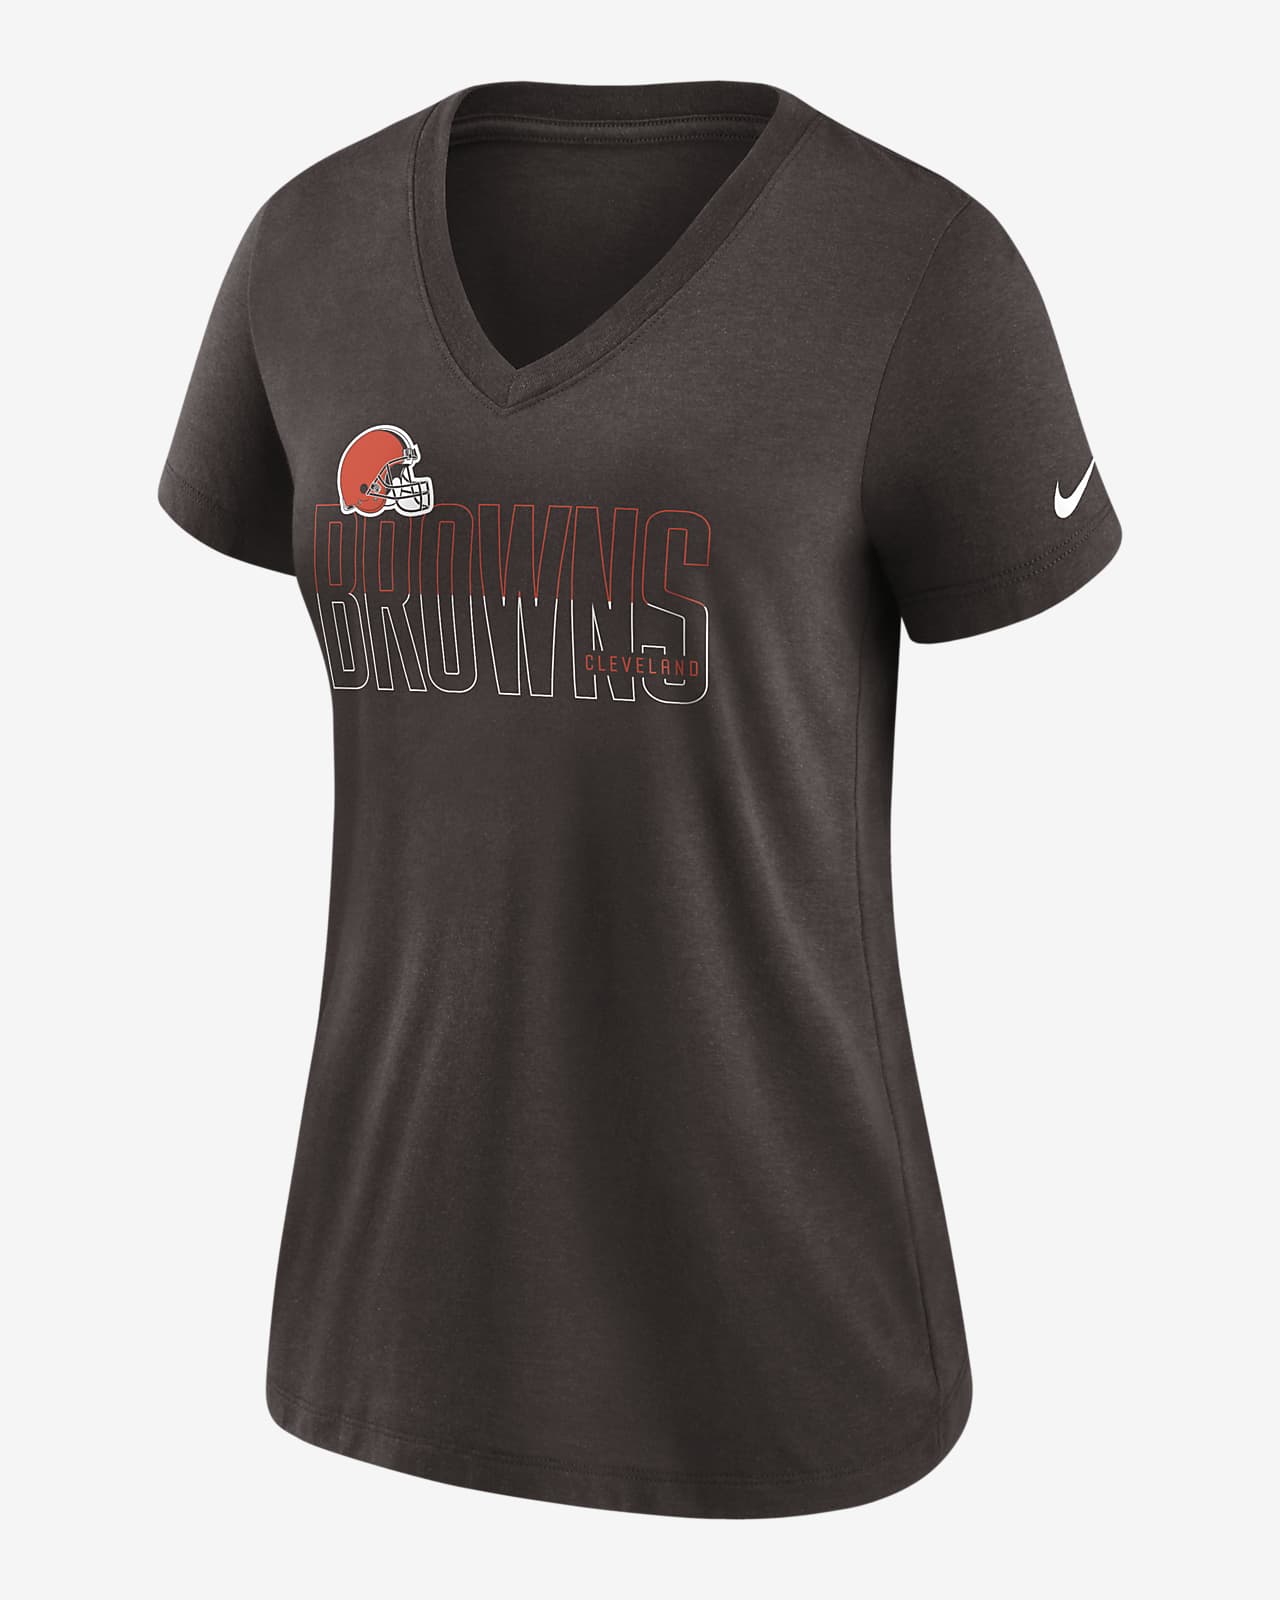 Nike Lockup Split (NFL Cleveland Browns) Women's Mid V-Neck T-Shirt